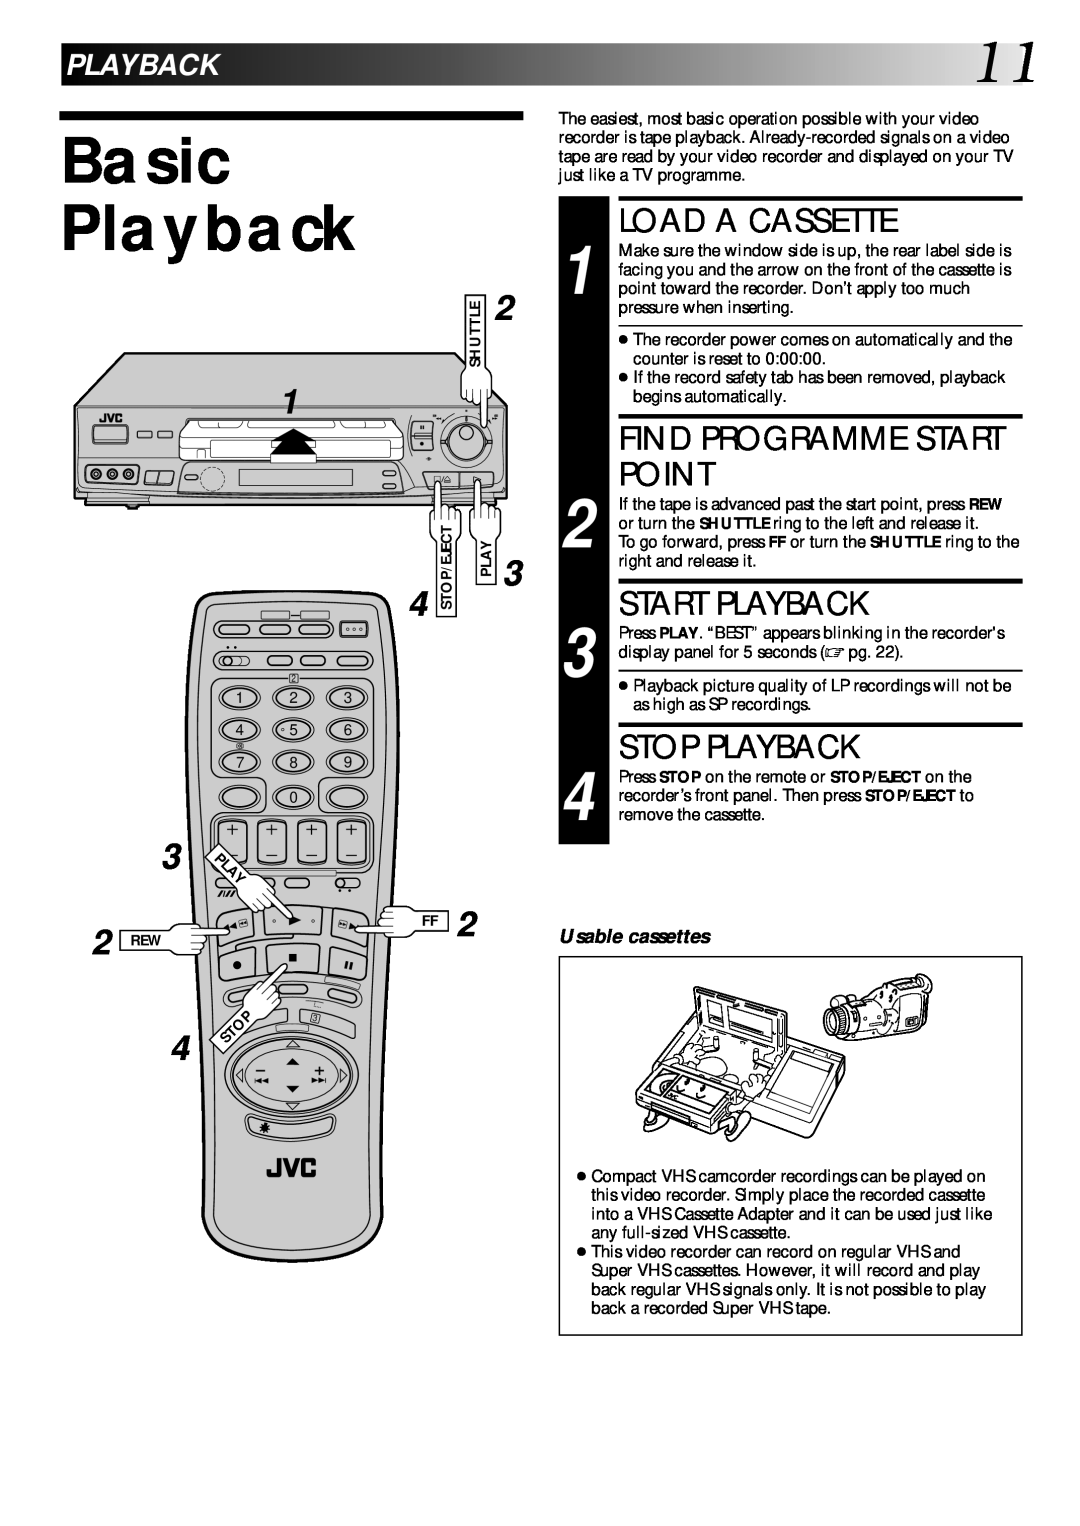 JVC PU30425 Basic Playback, Load A Cassette, Point, Start Playback, Stop Playback, Find Programme Start, Usable cassettes 